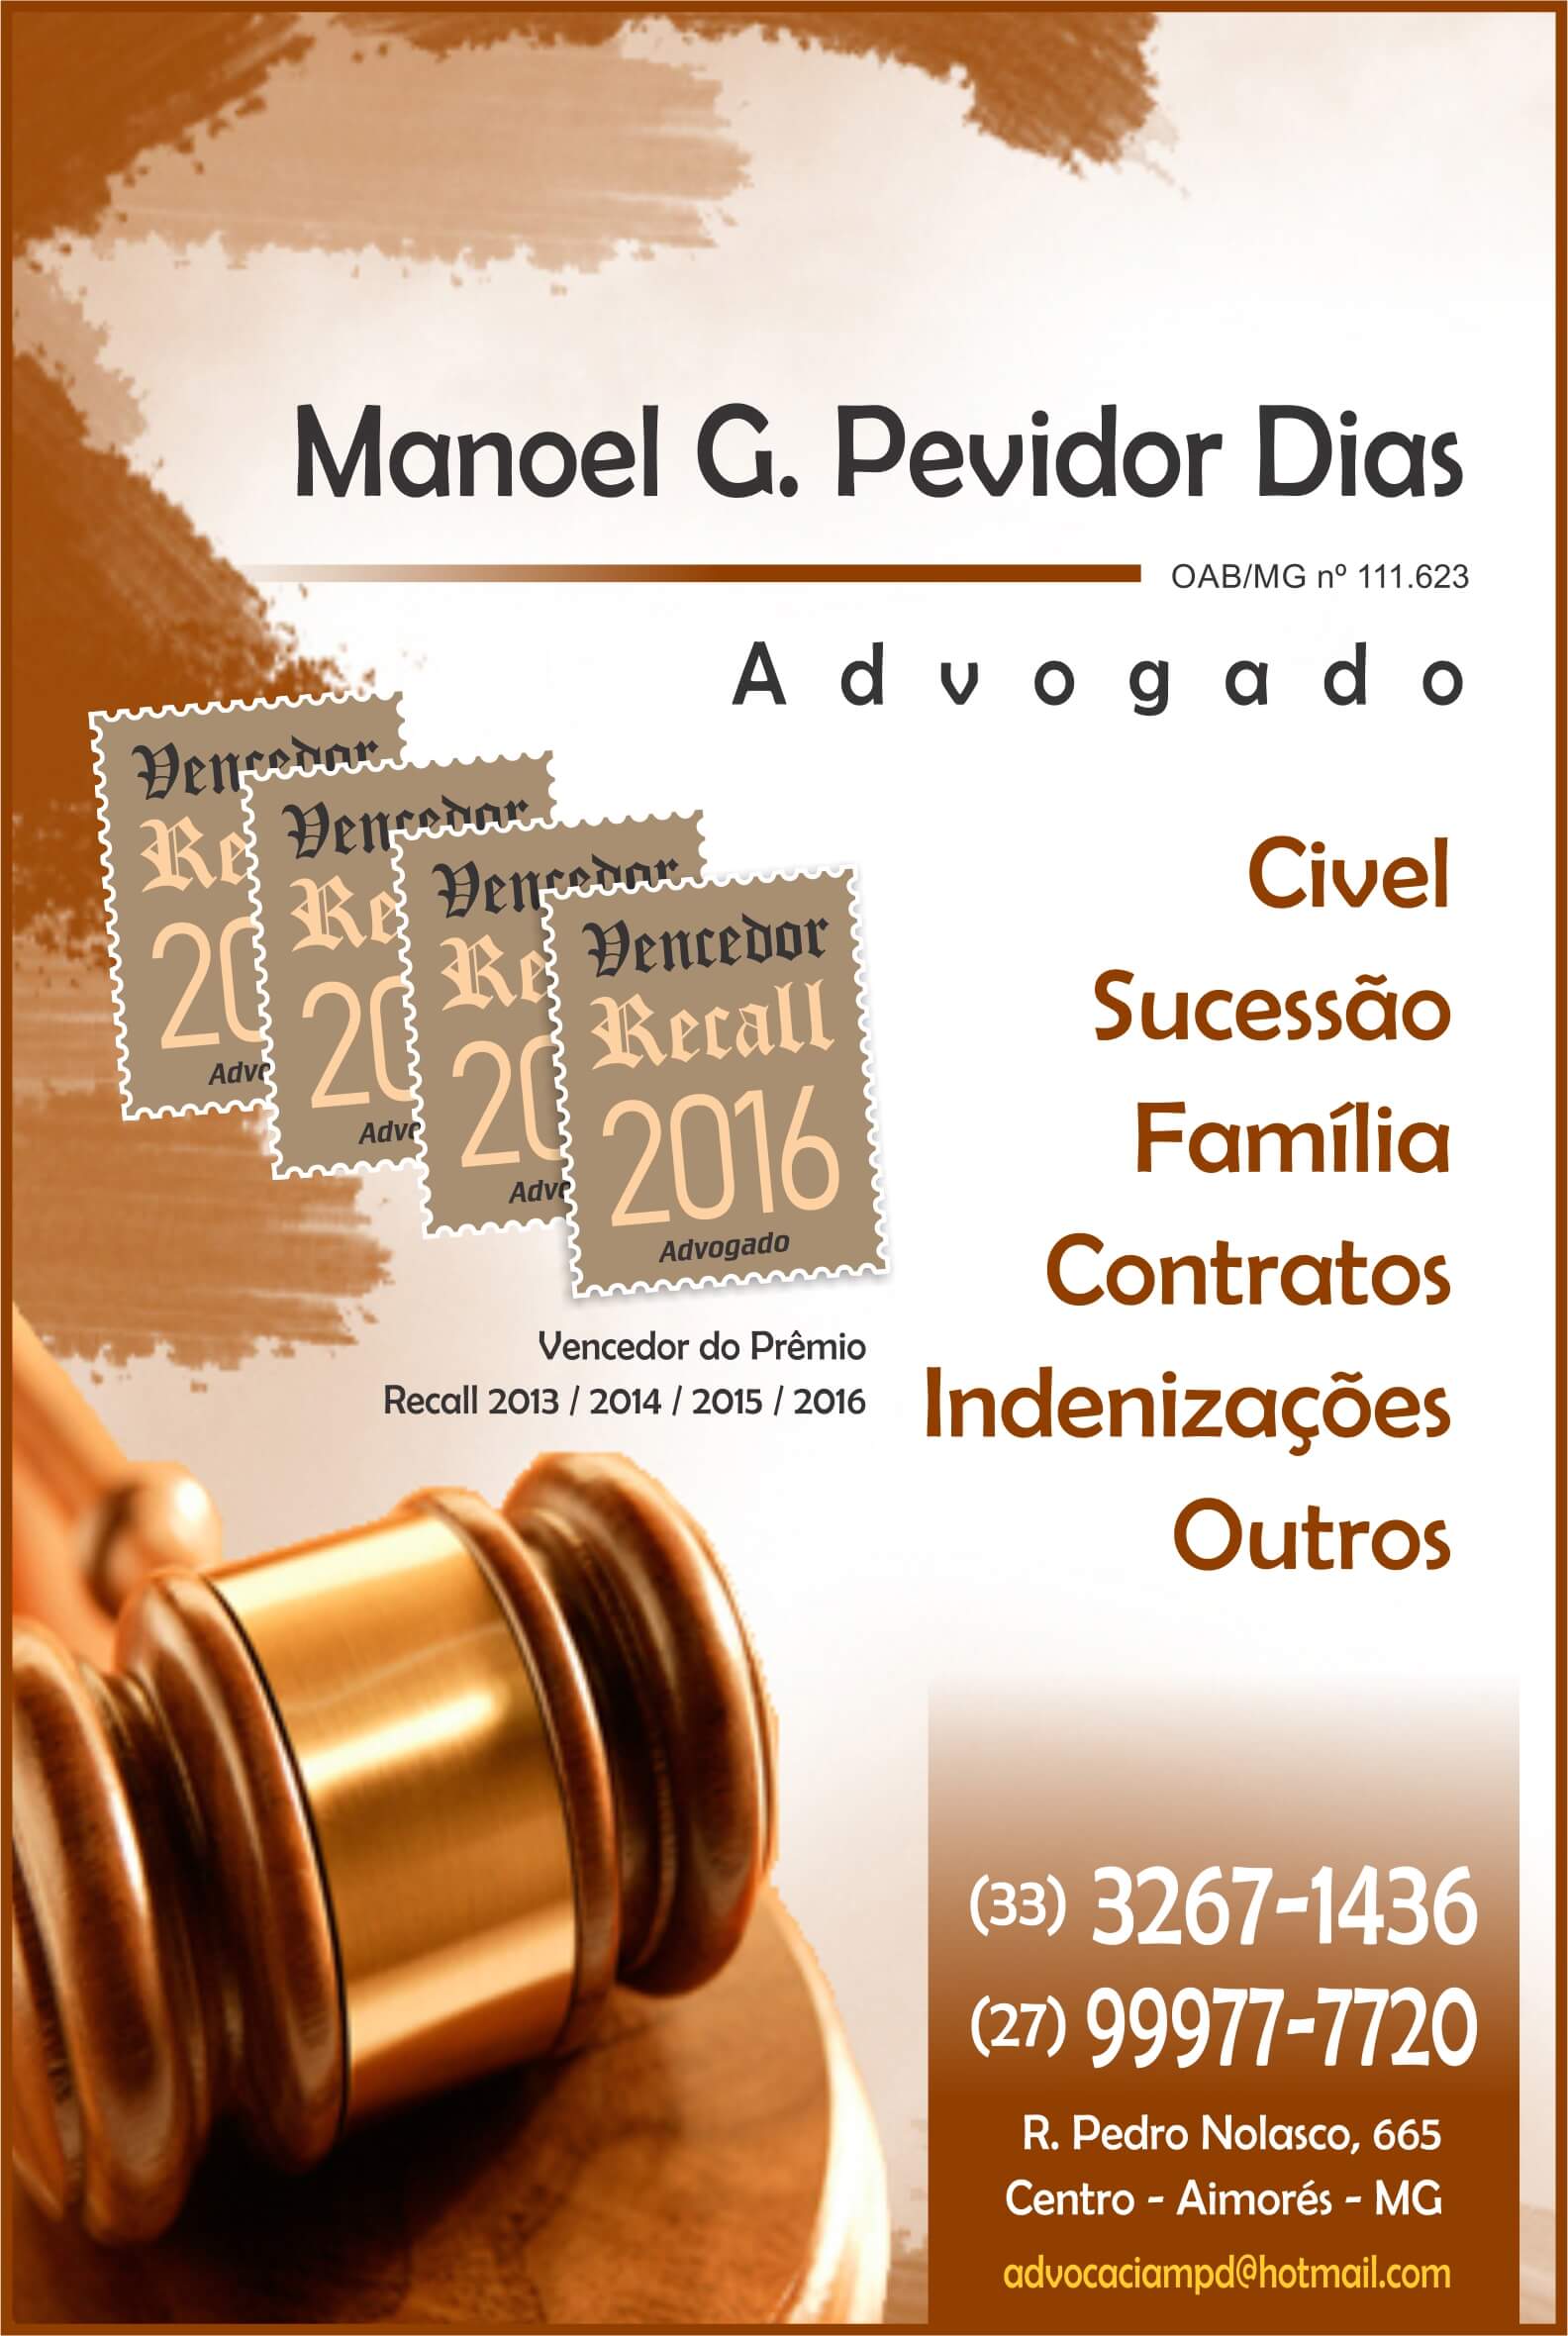 Dr. Manoel G. Pevidor Dias (advogado)